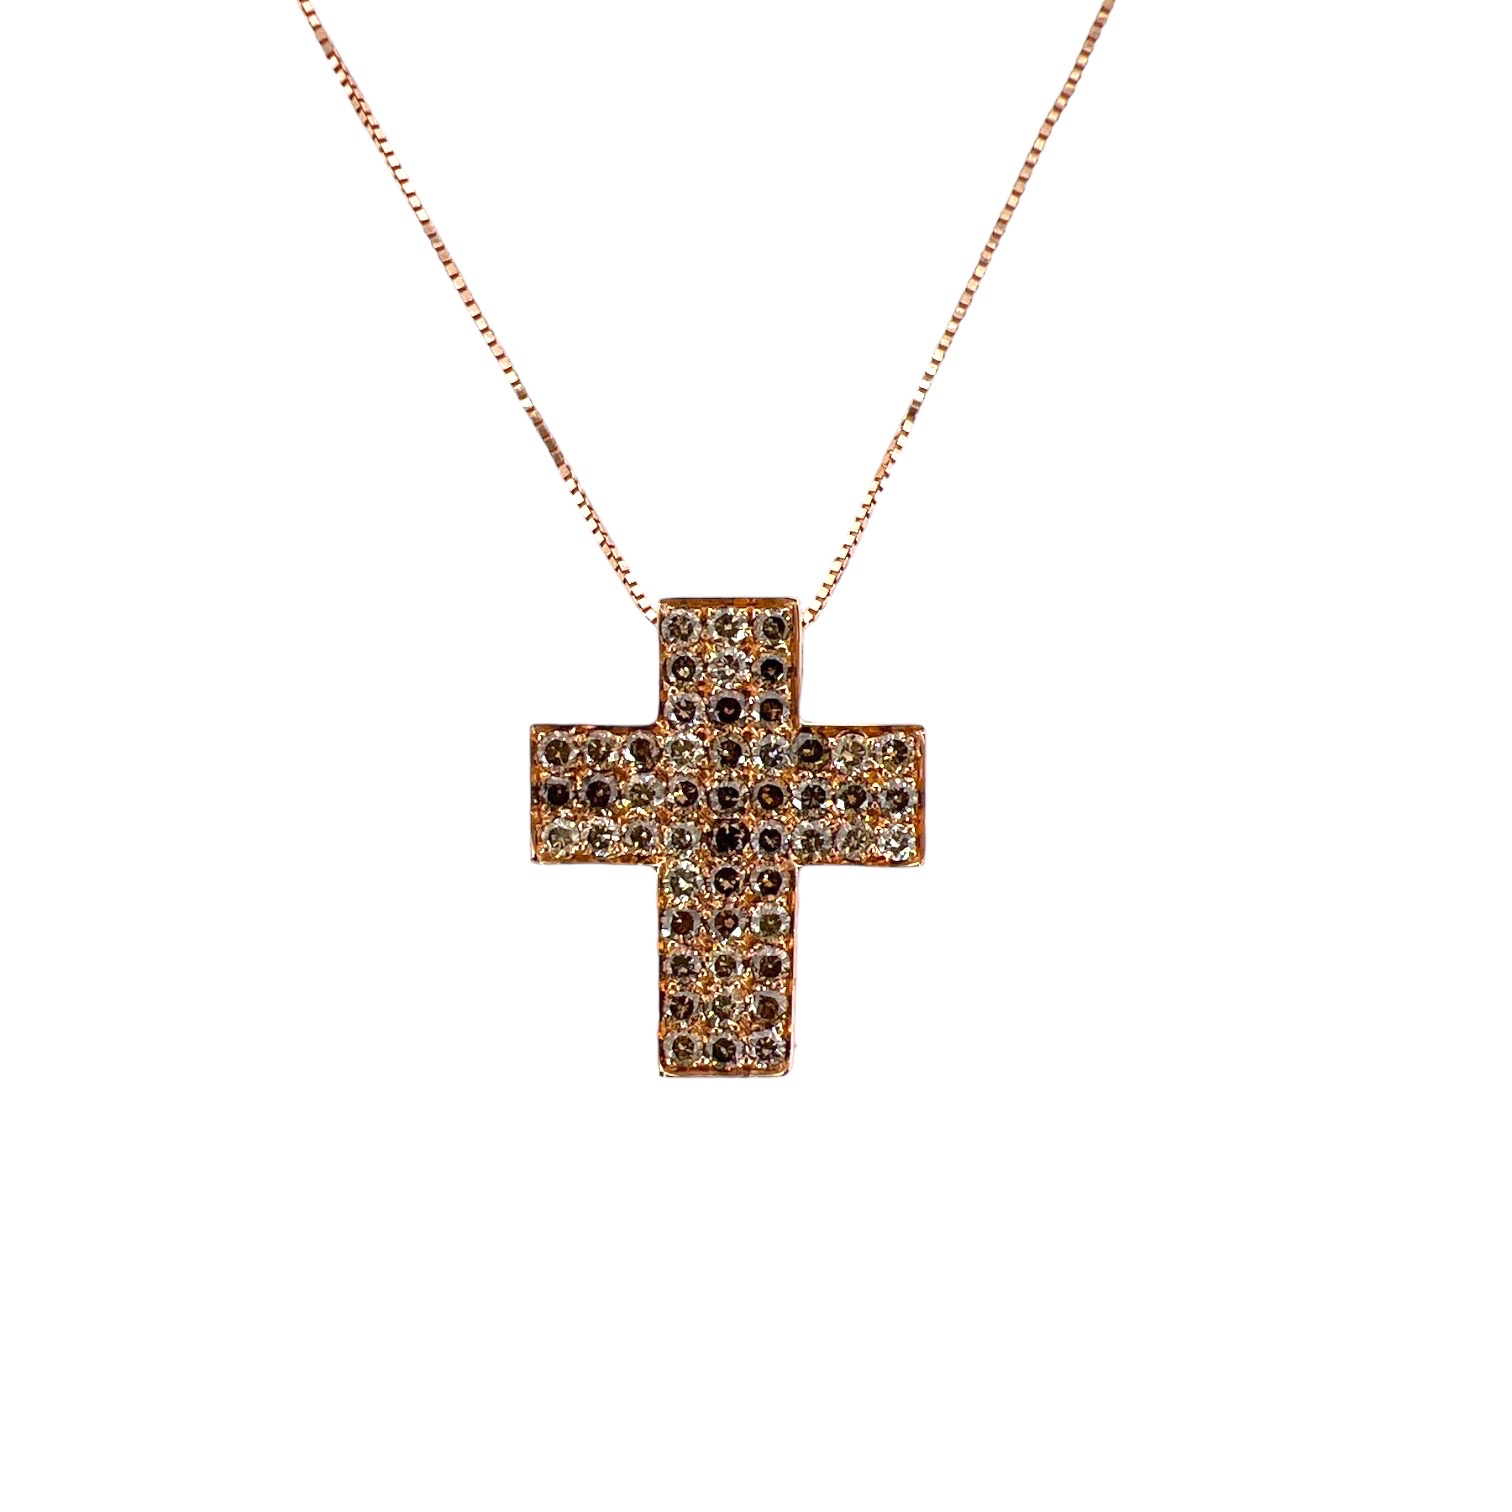 Rose gold and diamond cross pendant Art. GR352